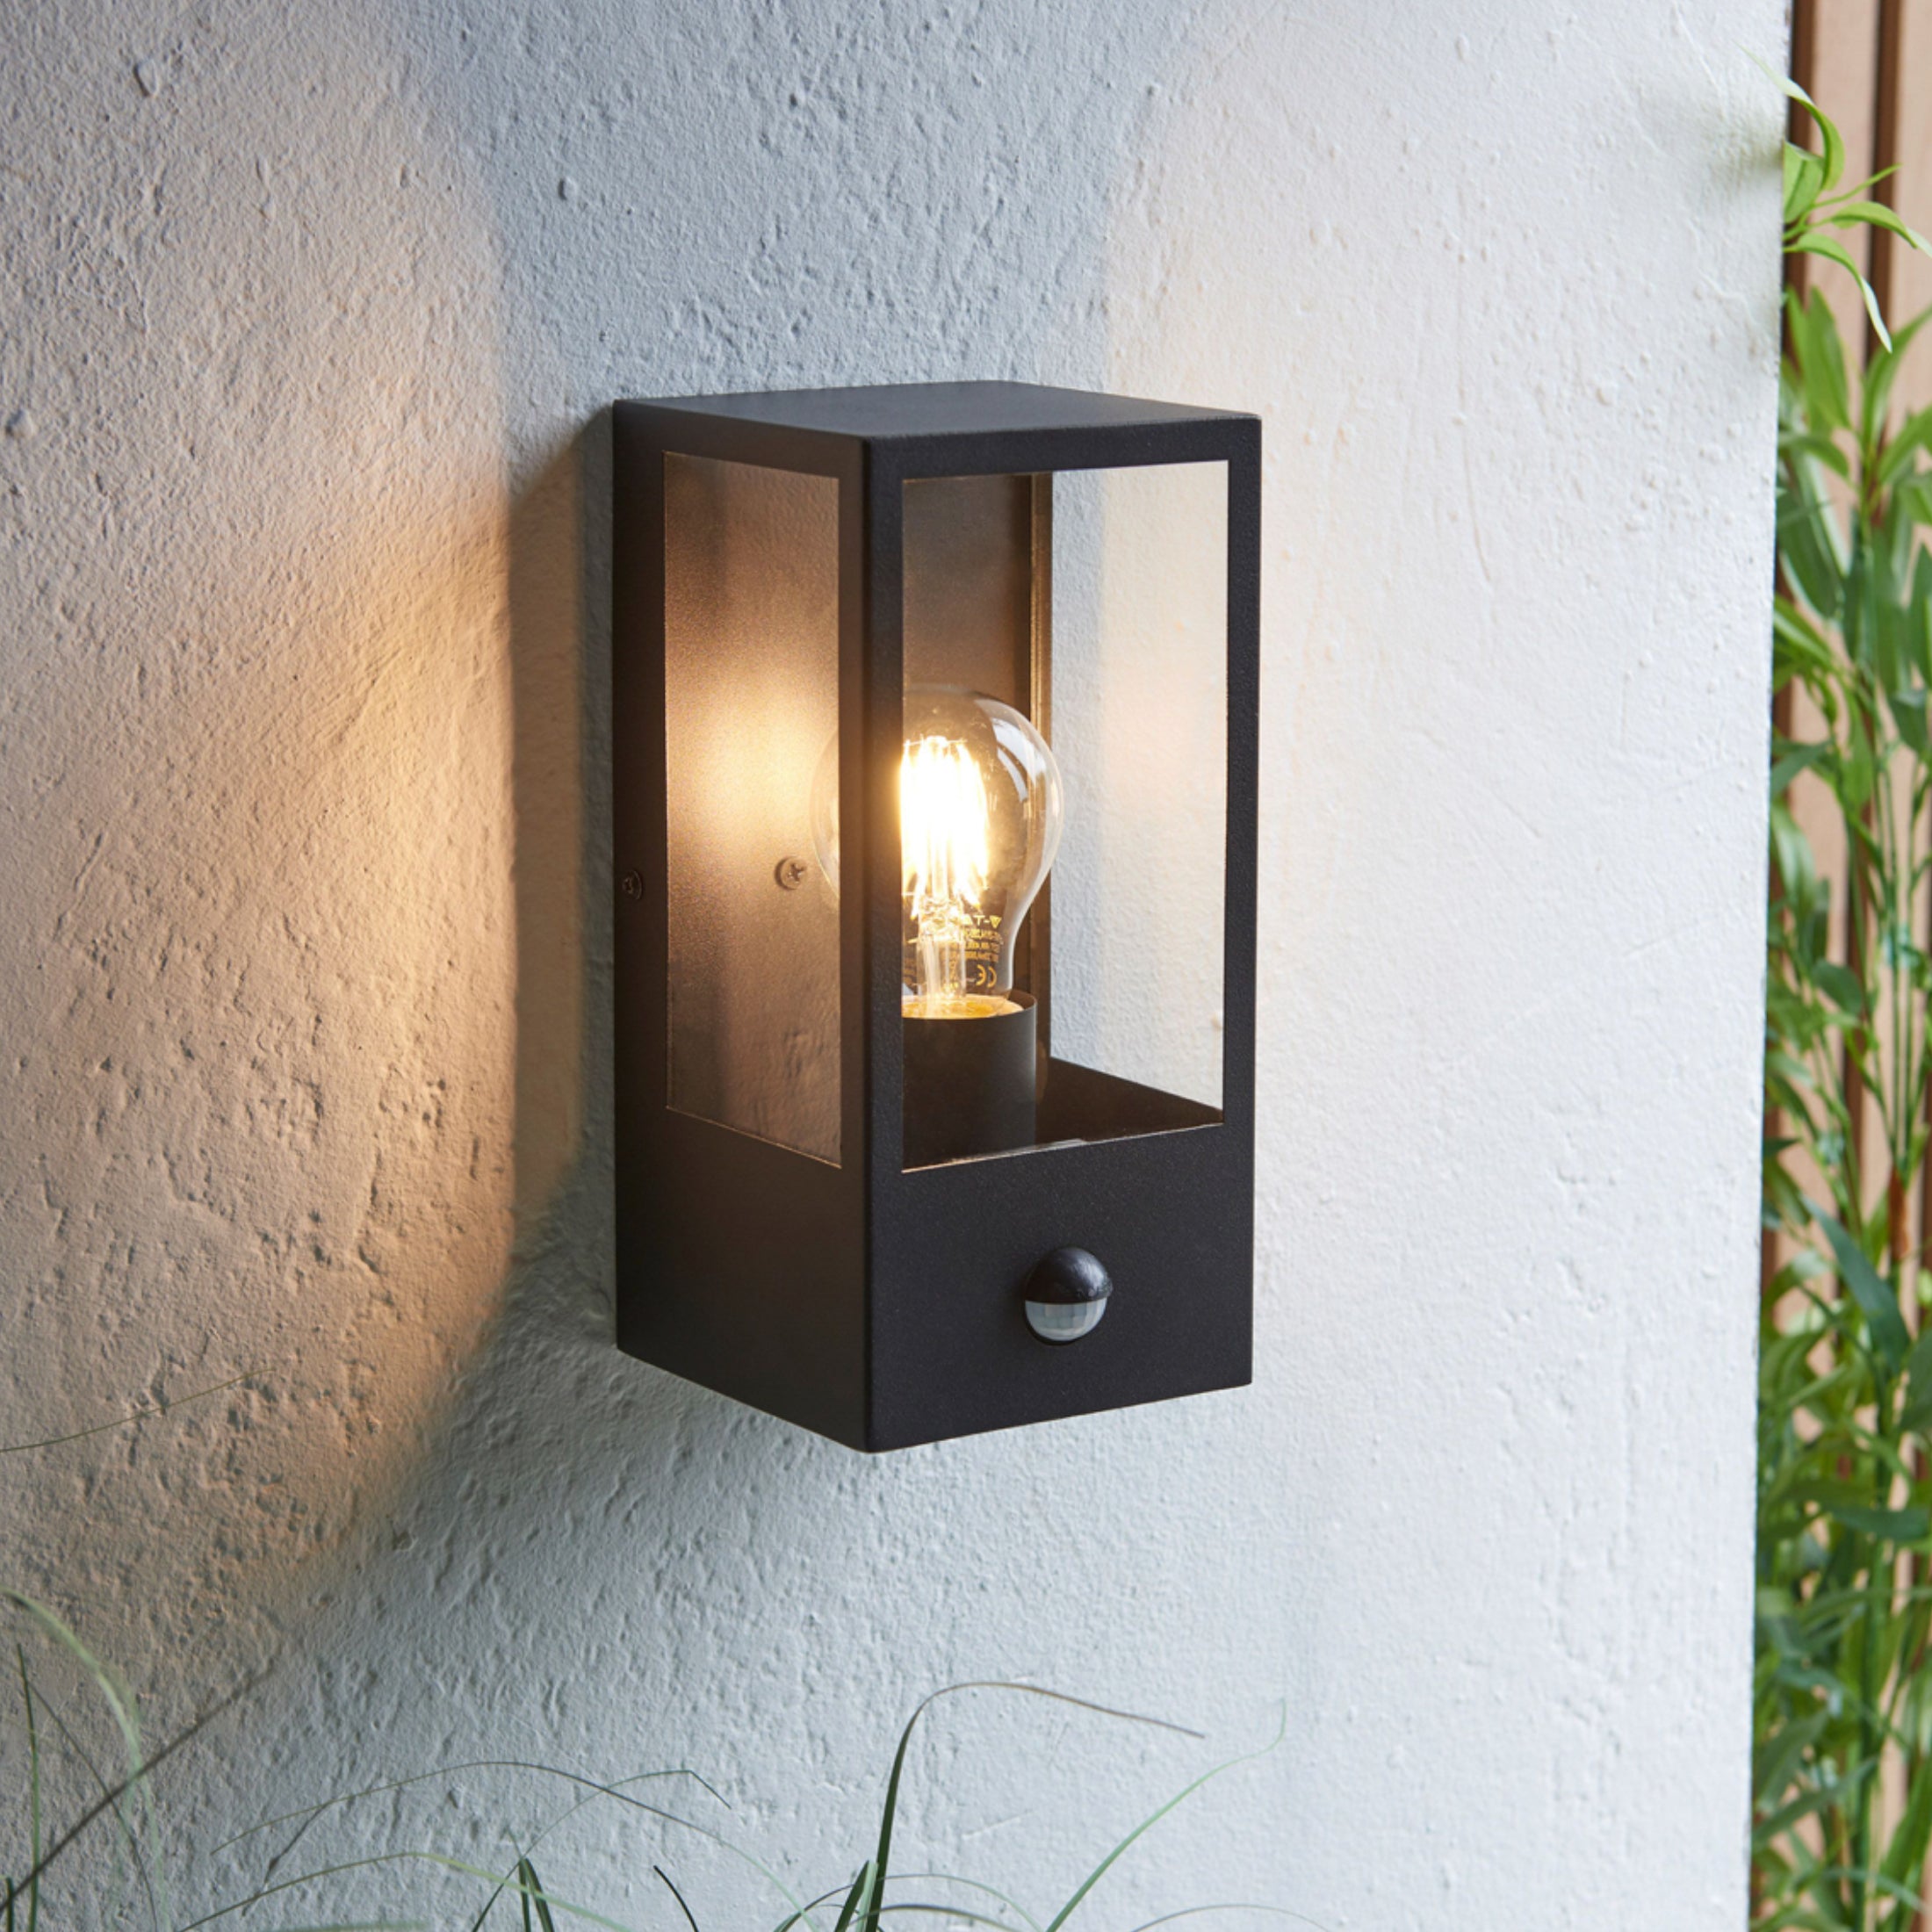 Outdoor Matt Black Box Lantern Wall Light with PIR Sensor 2